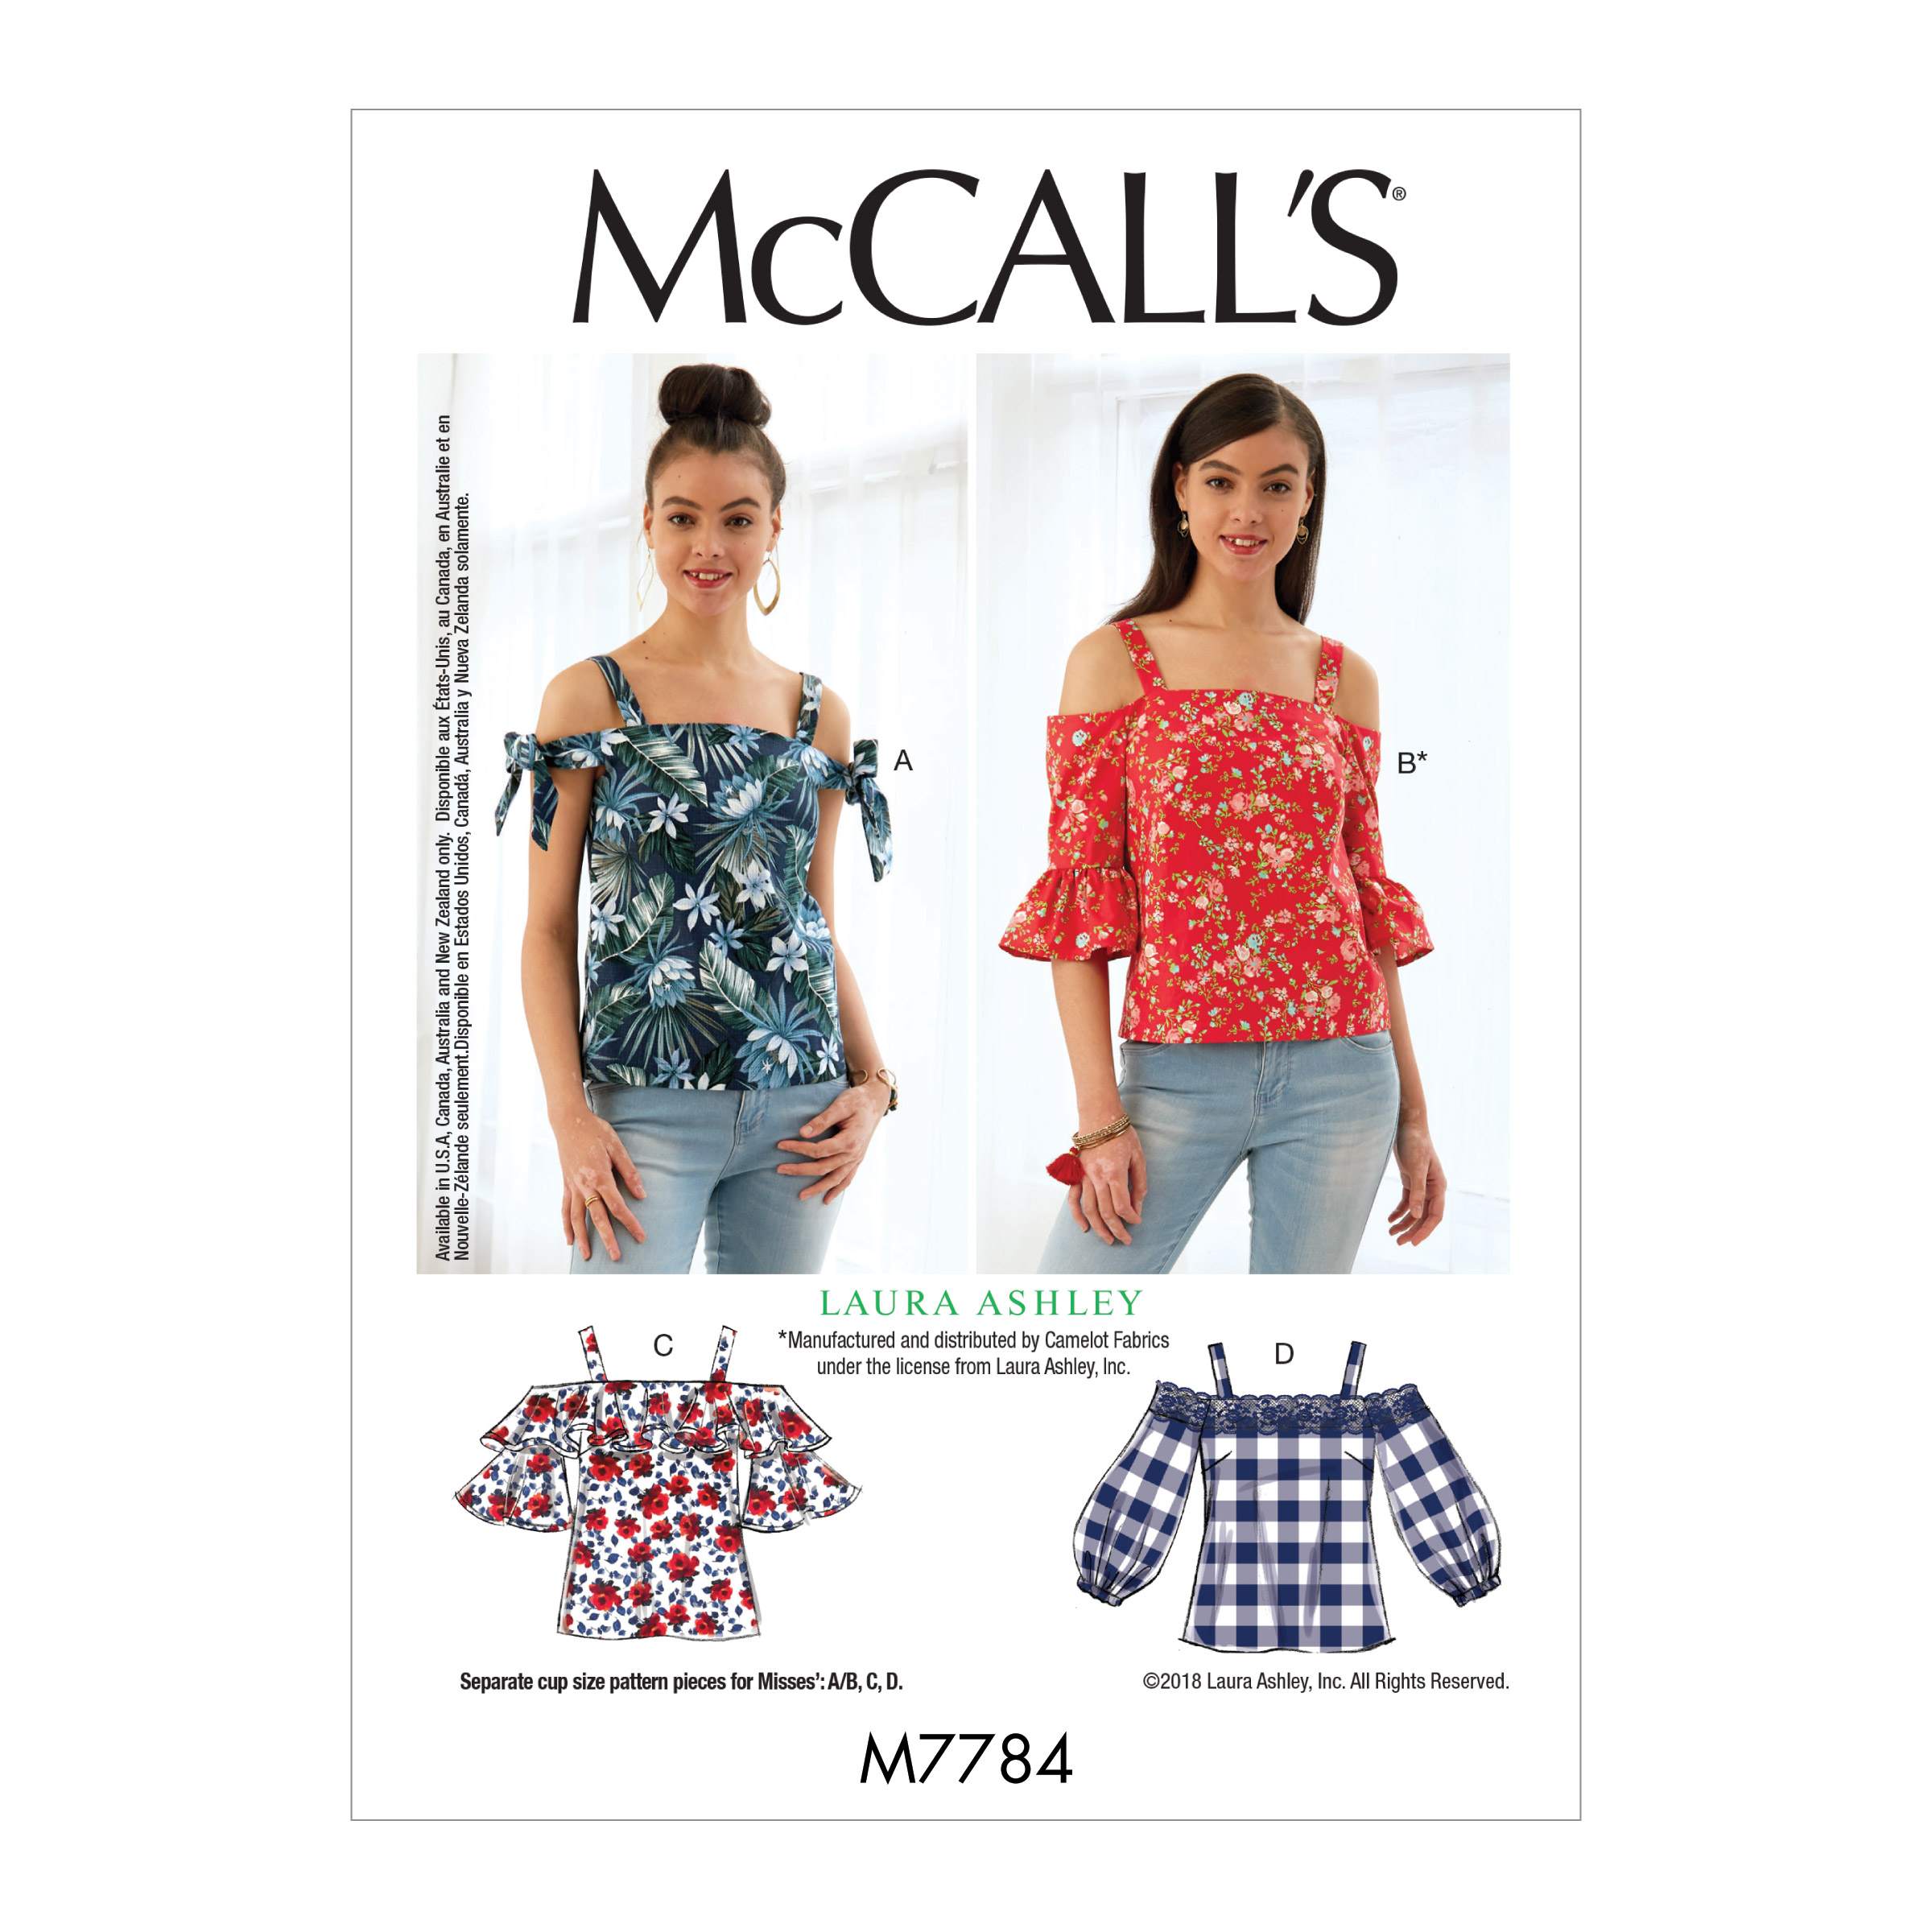 mccalls sewing patterns#7788 Size CJ (10,12,14)